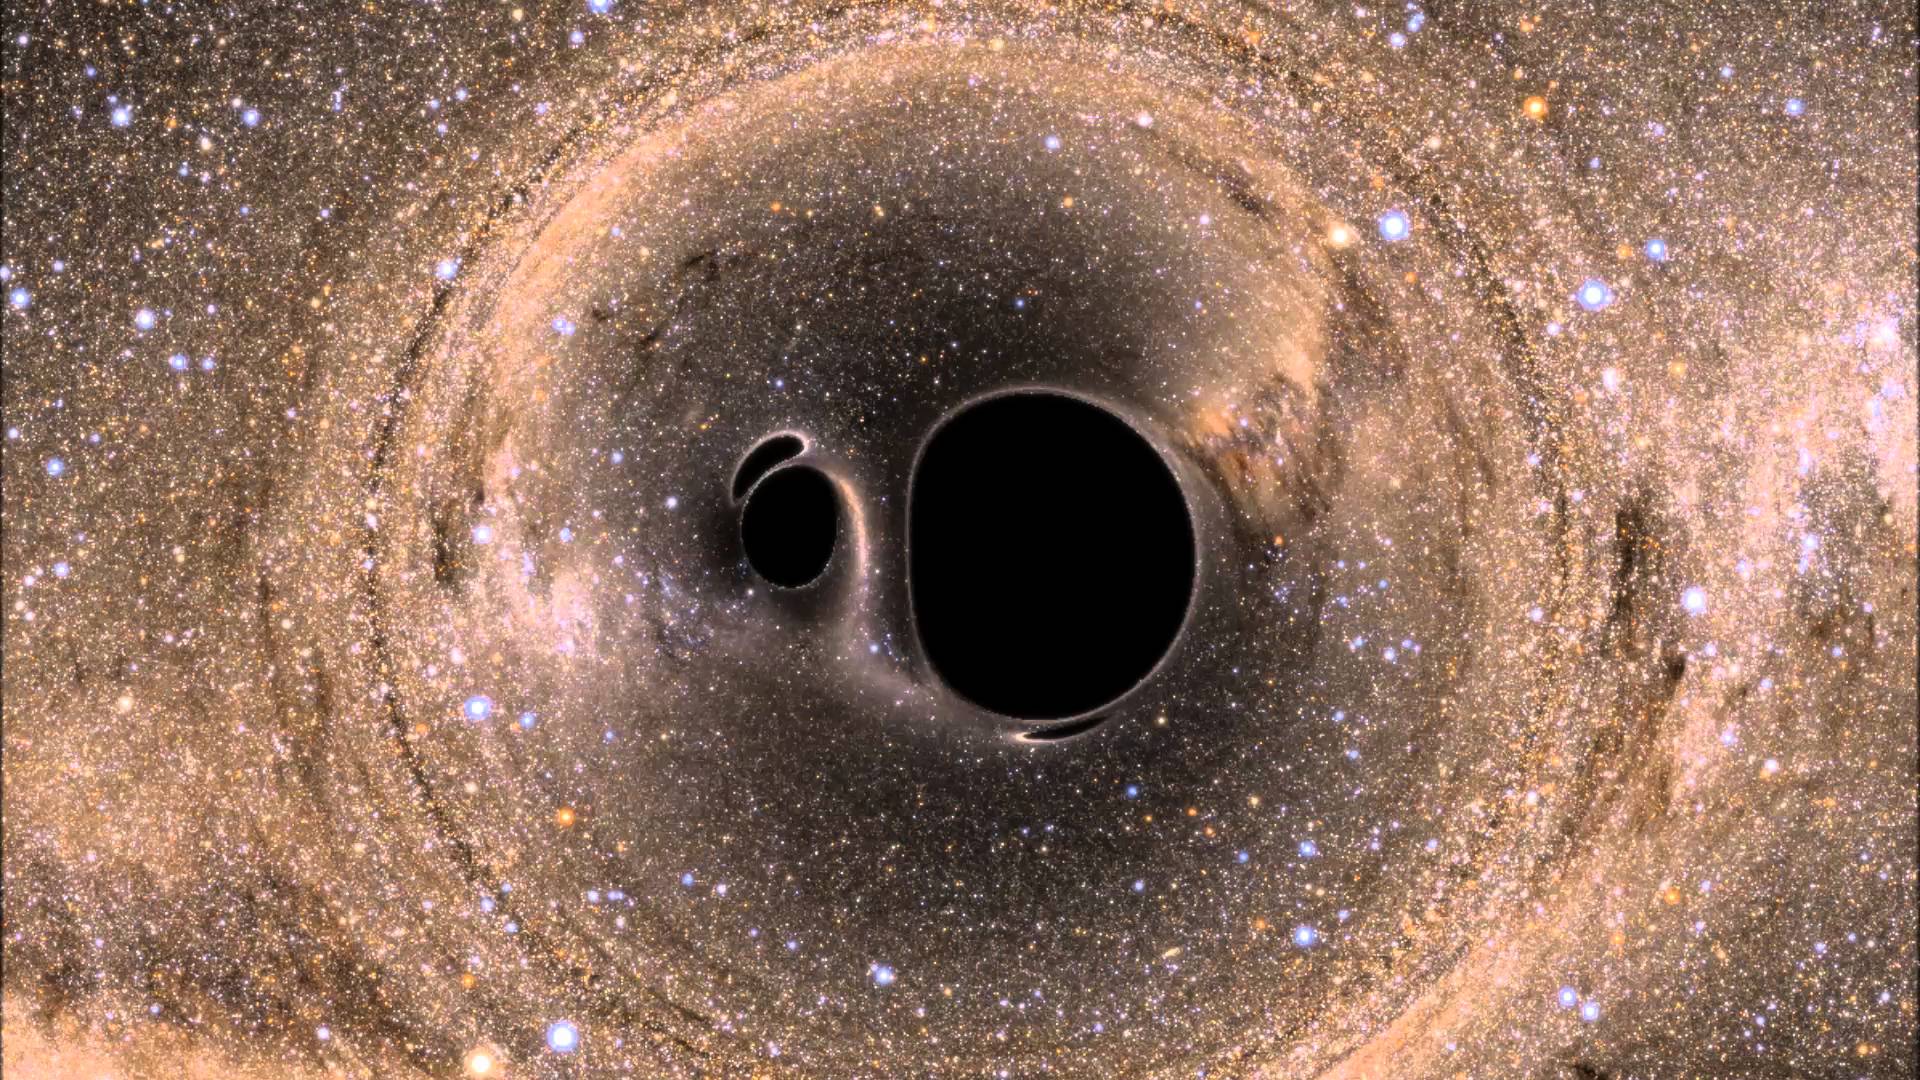 Gravitational waves may shed light on dark matter